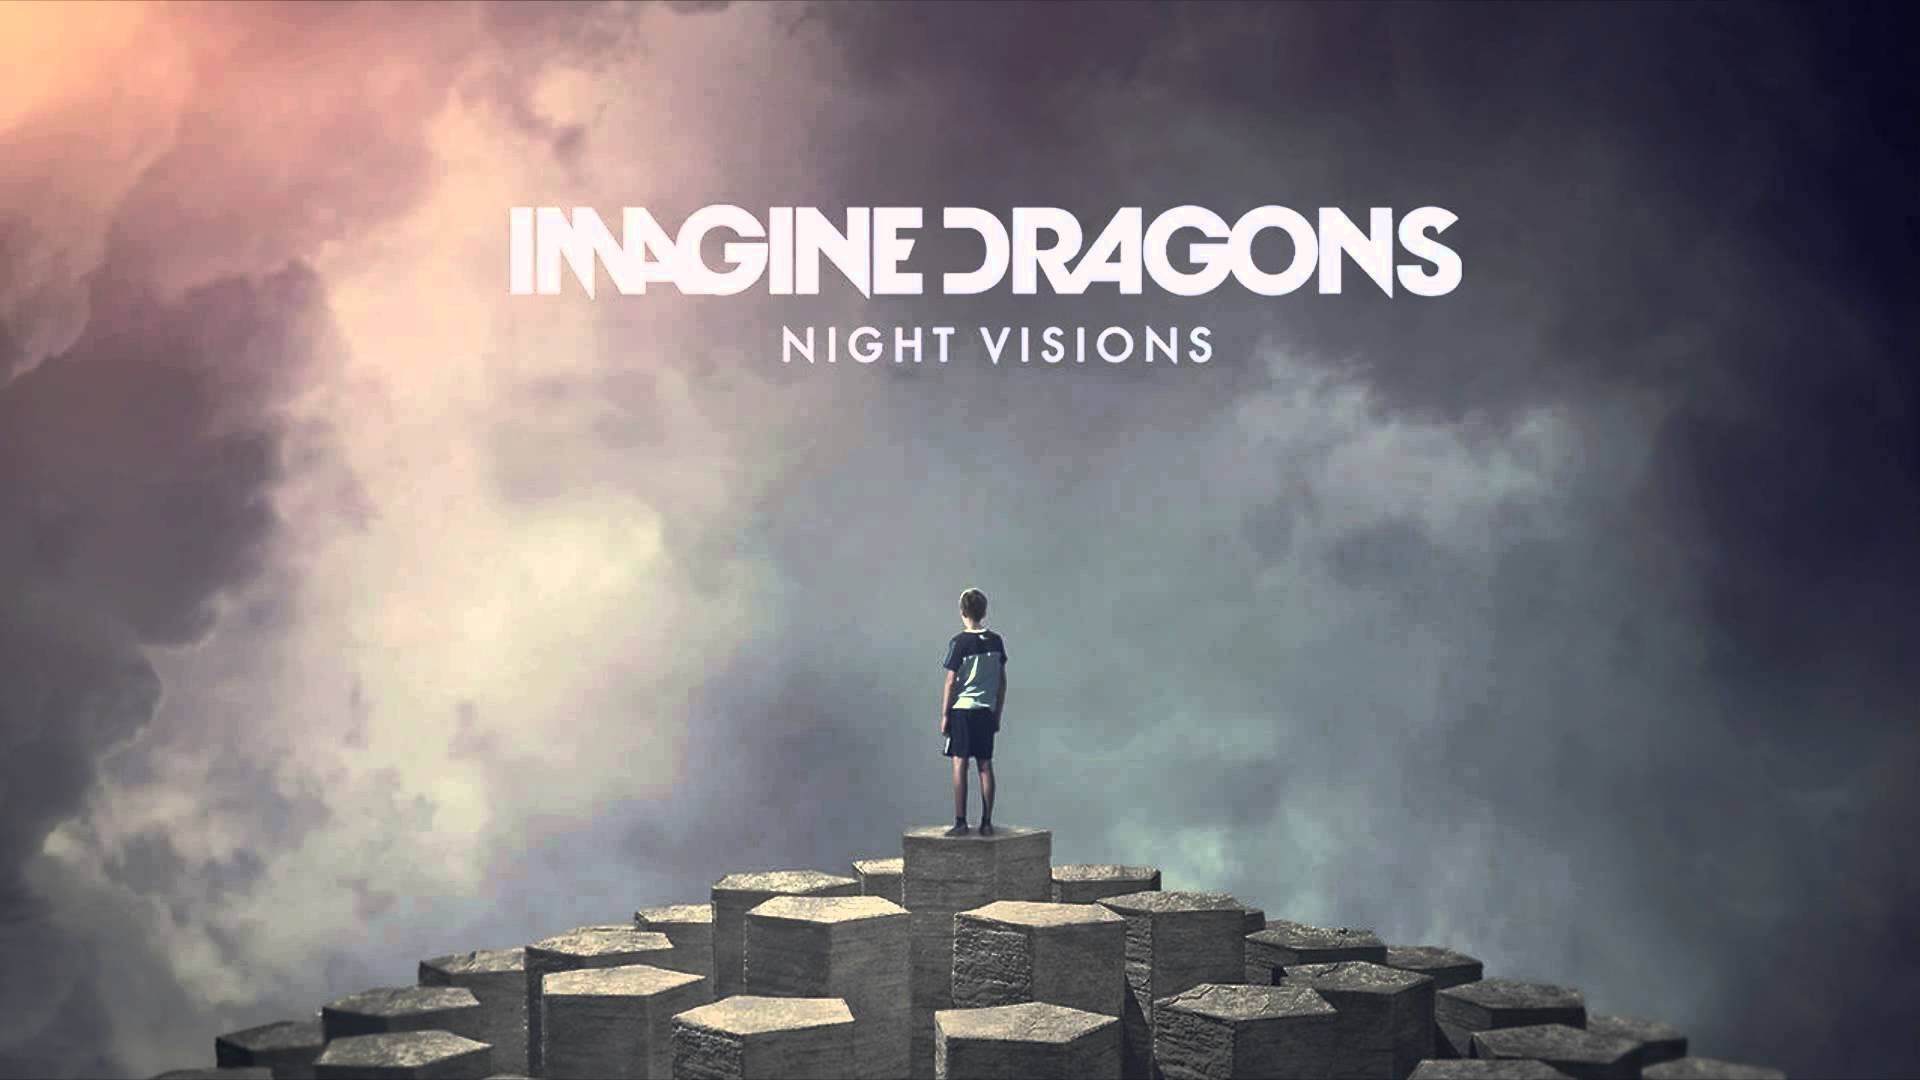 Imagine e. Imagine Dragons альбом Night Visions. Радиоактив imagine Dragons. Imagine Dragons Radioactive обложка. Imagine Dragons Night Visions обложка.